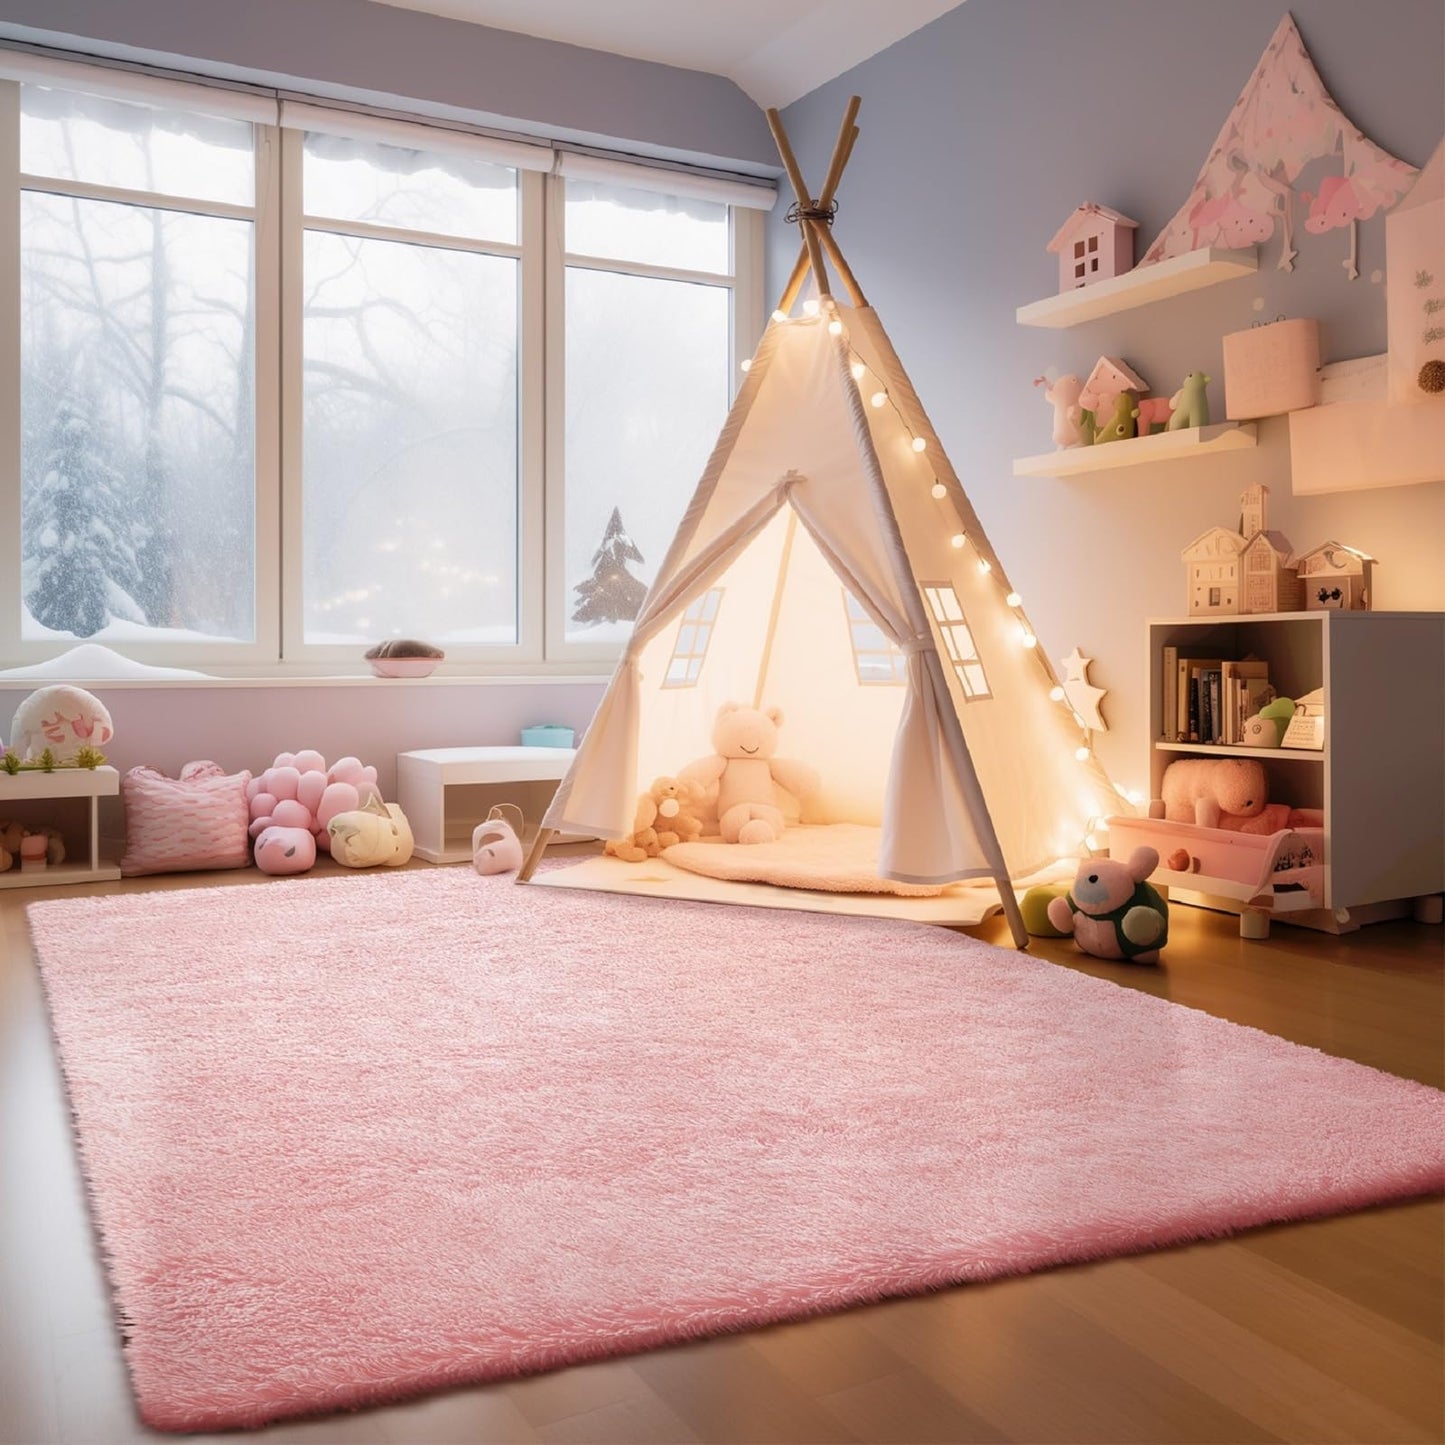 Ophanie Light Pink Area Rugs for Bedroom Girls, 4x6 Fluffy Fuzzy Furry Shag Carpet, Plush Soft Cute Kids Baby Shaggy Bedside Indoor Floor Rug for Teen Dorm Home Decor Aesthetic, Nursery